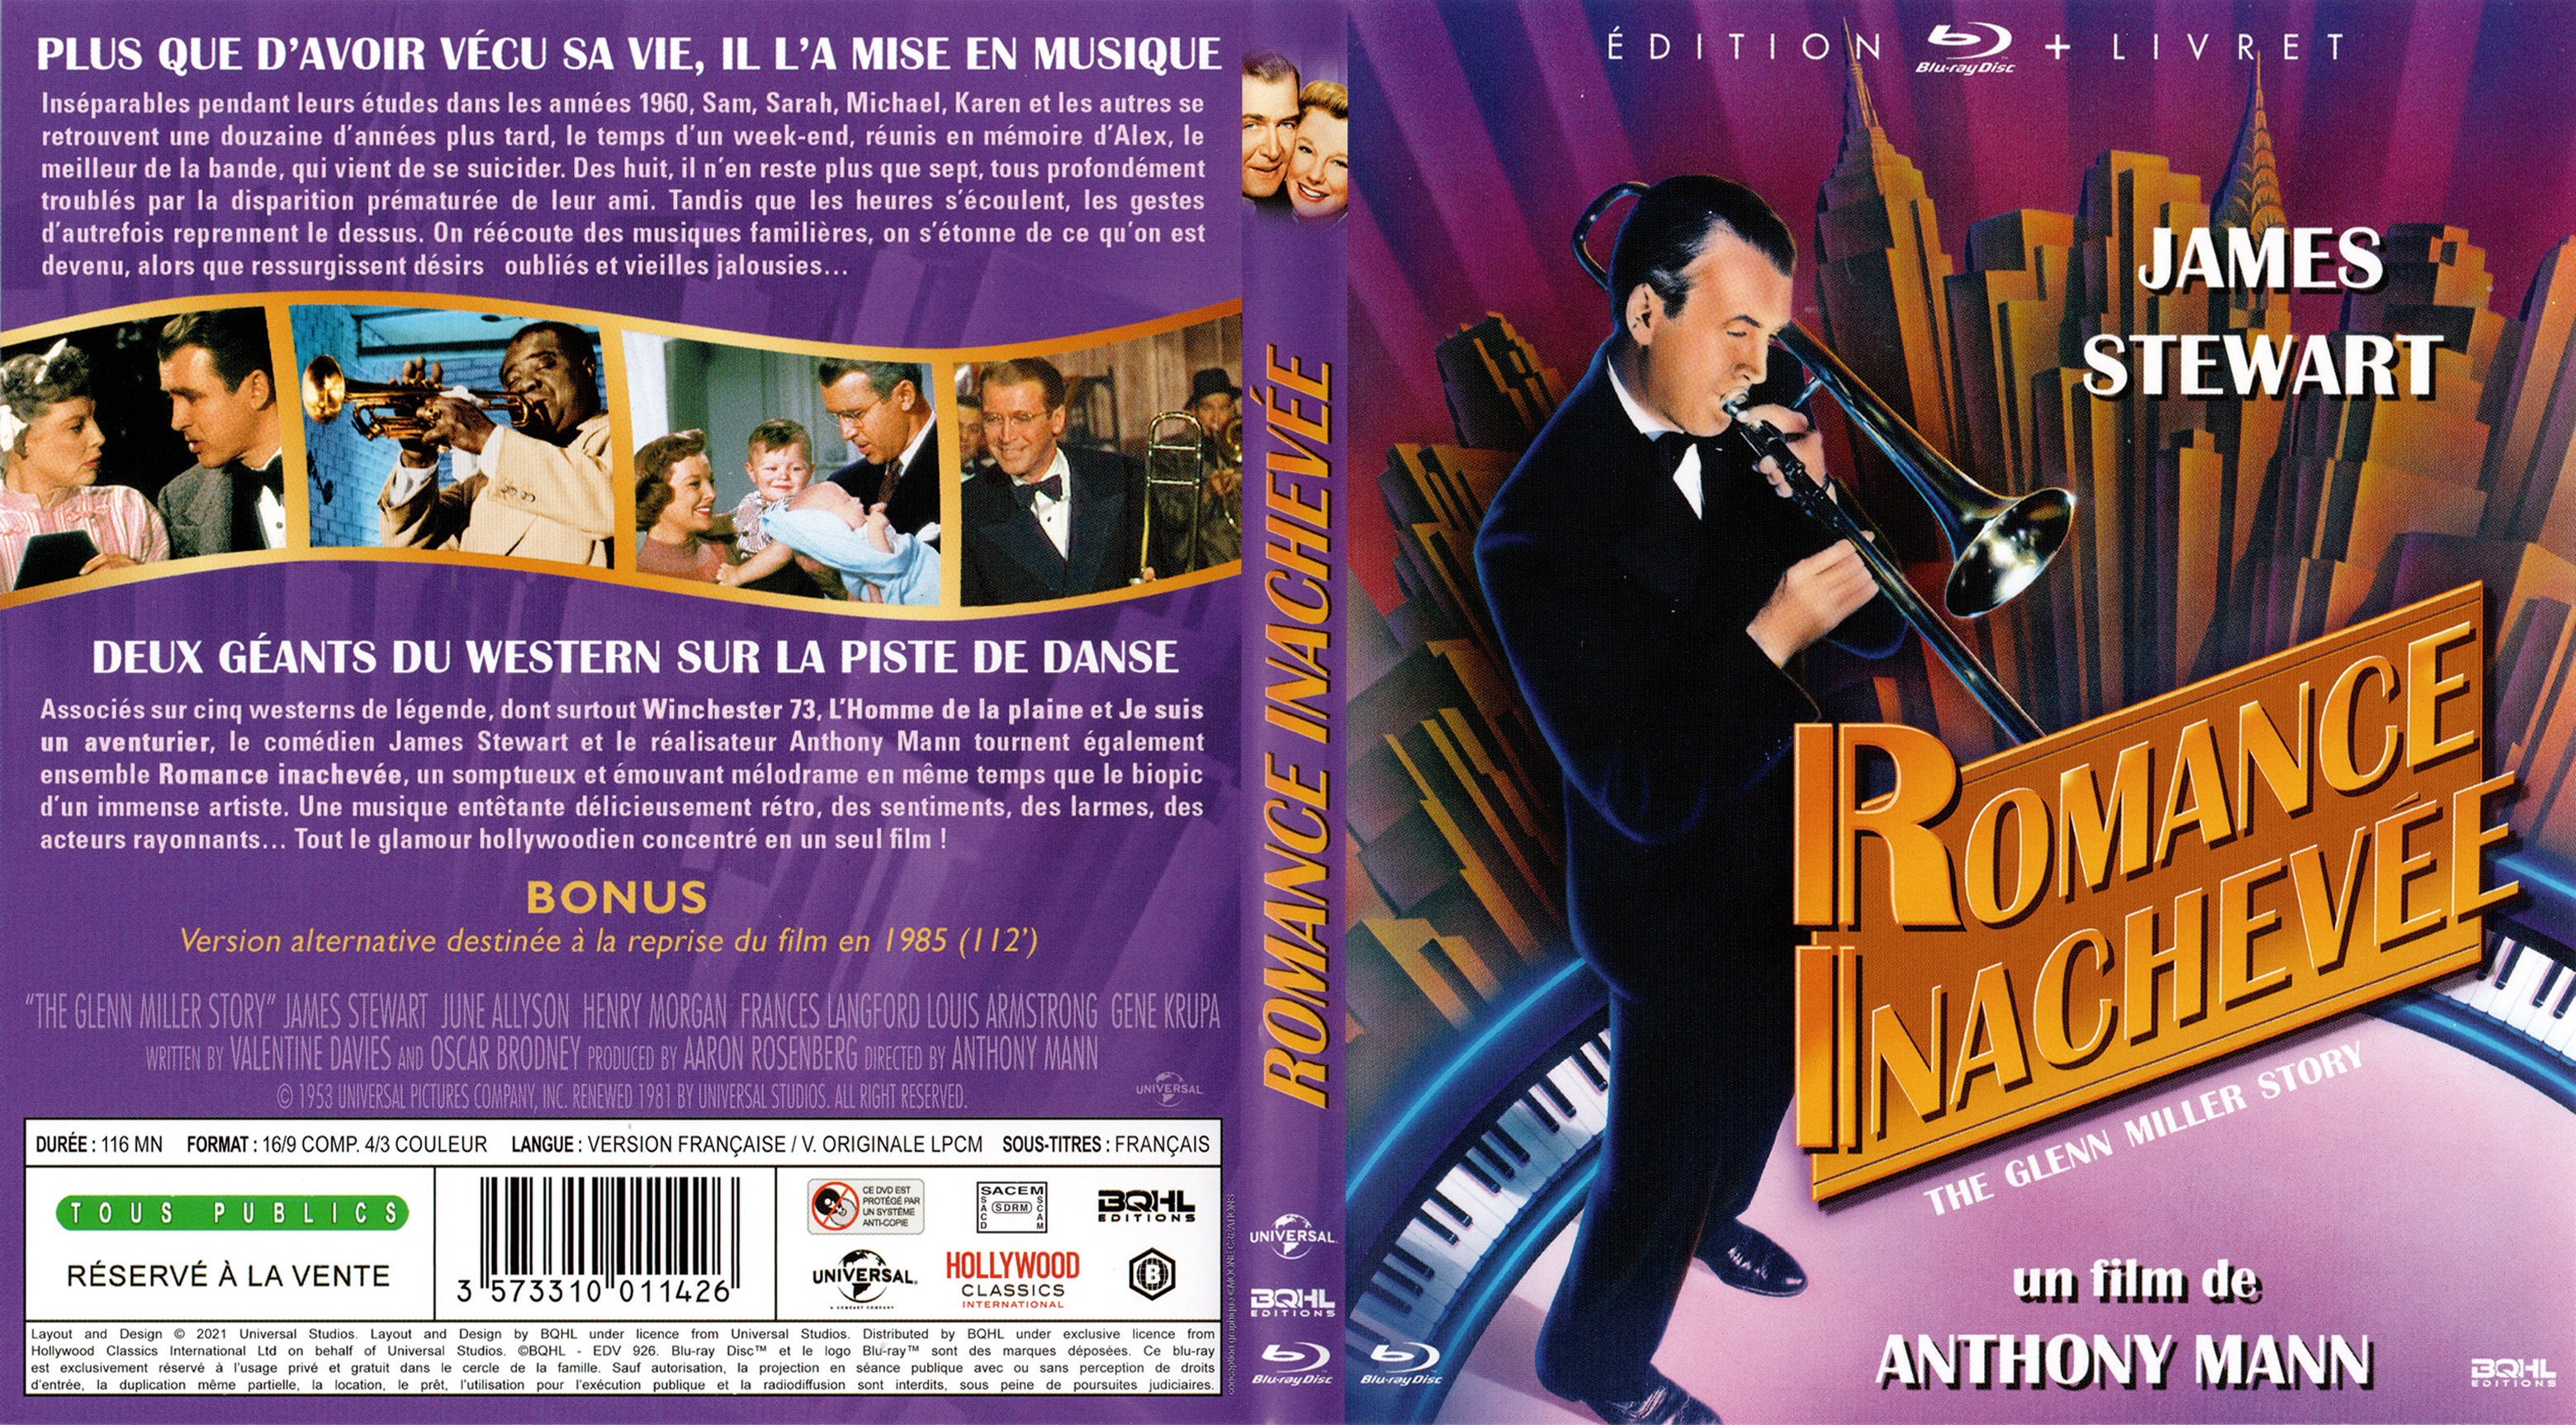 Jaquette DVD Romance inacheve (BLU-RAY)